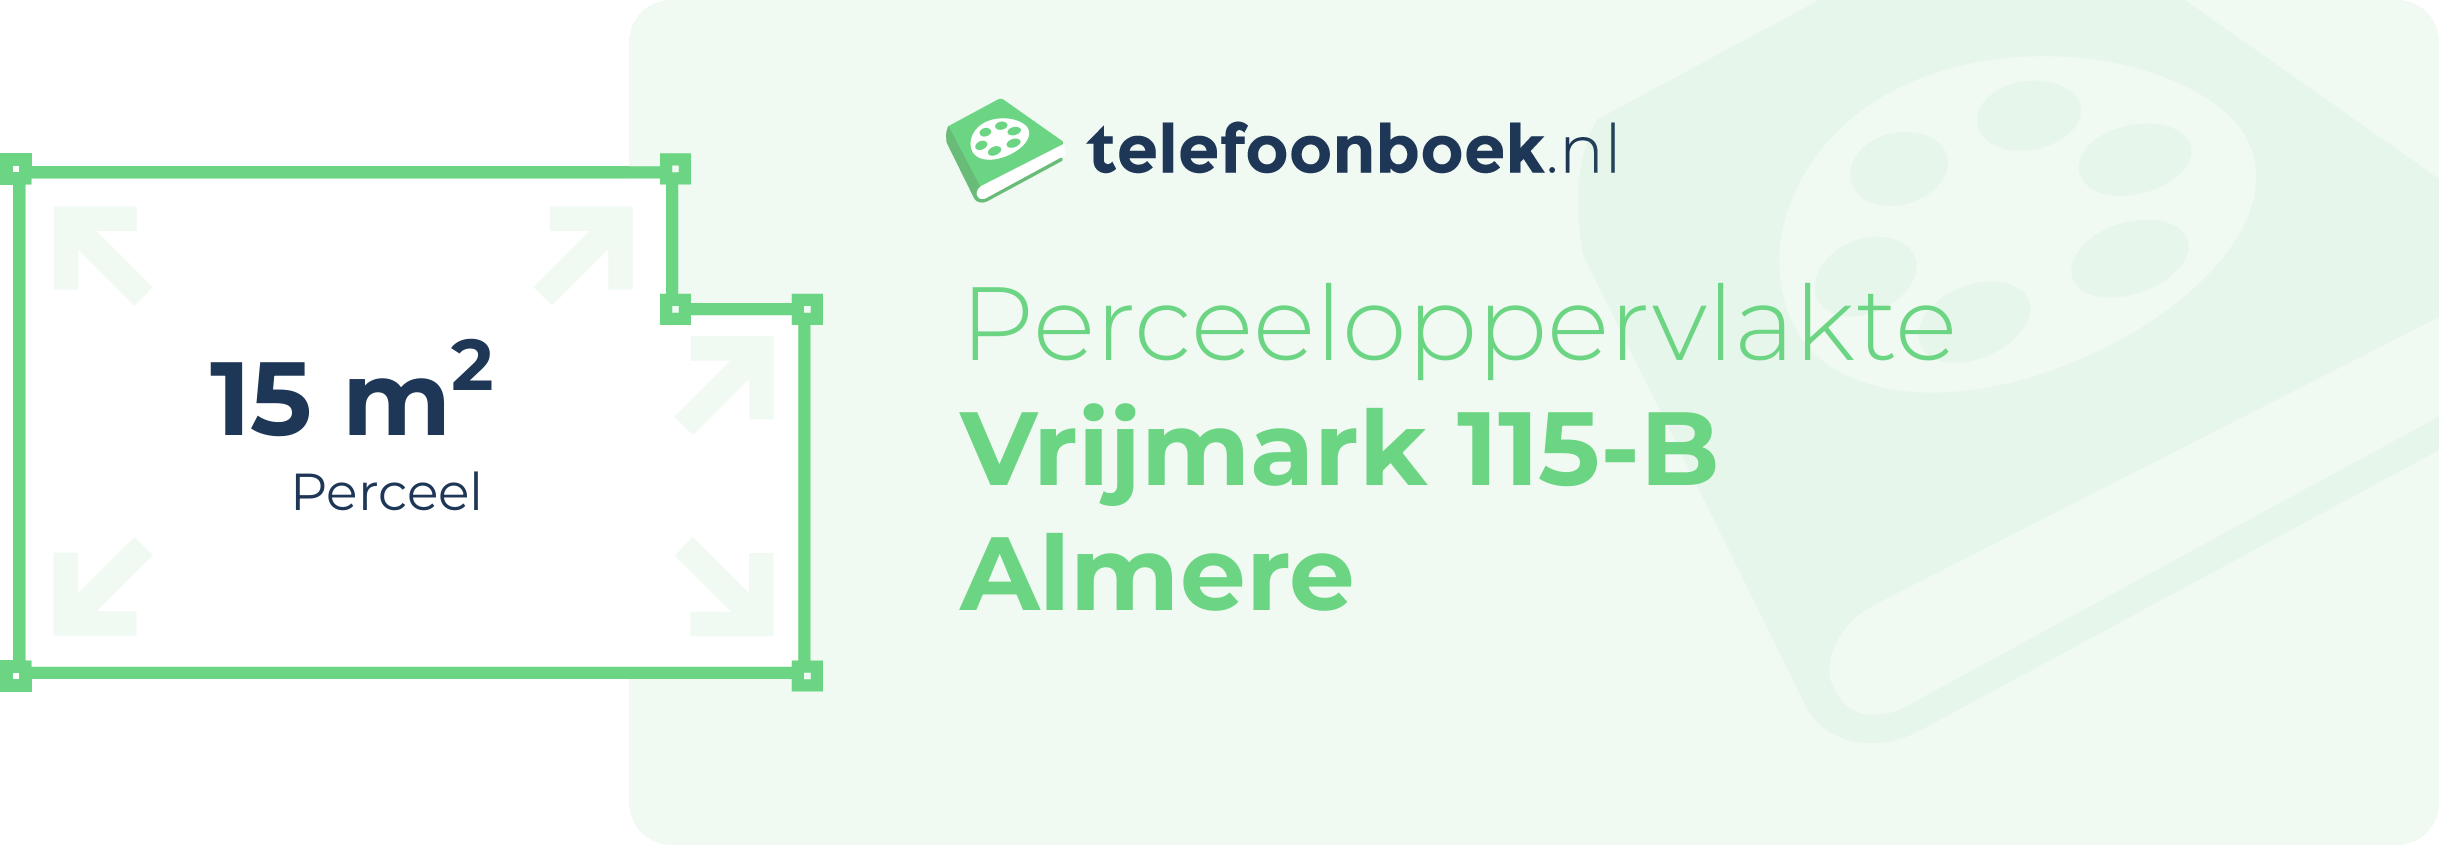 Perceeloppervlakte Vrijmark 115-B Almere